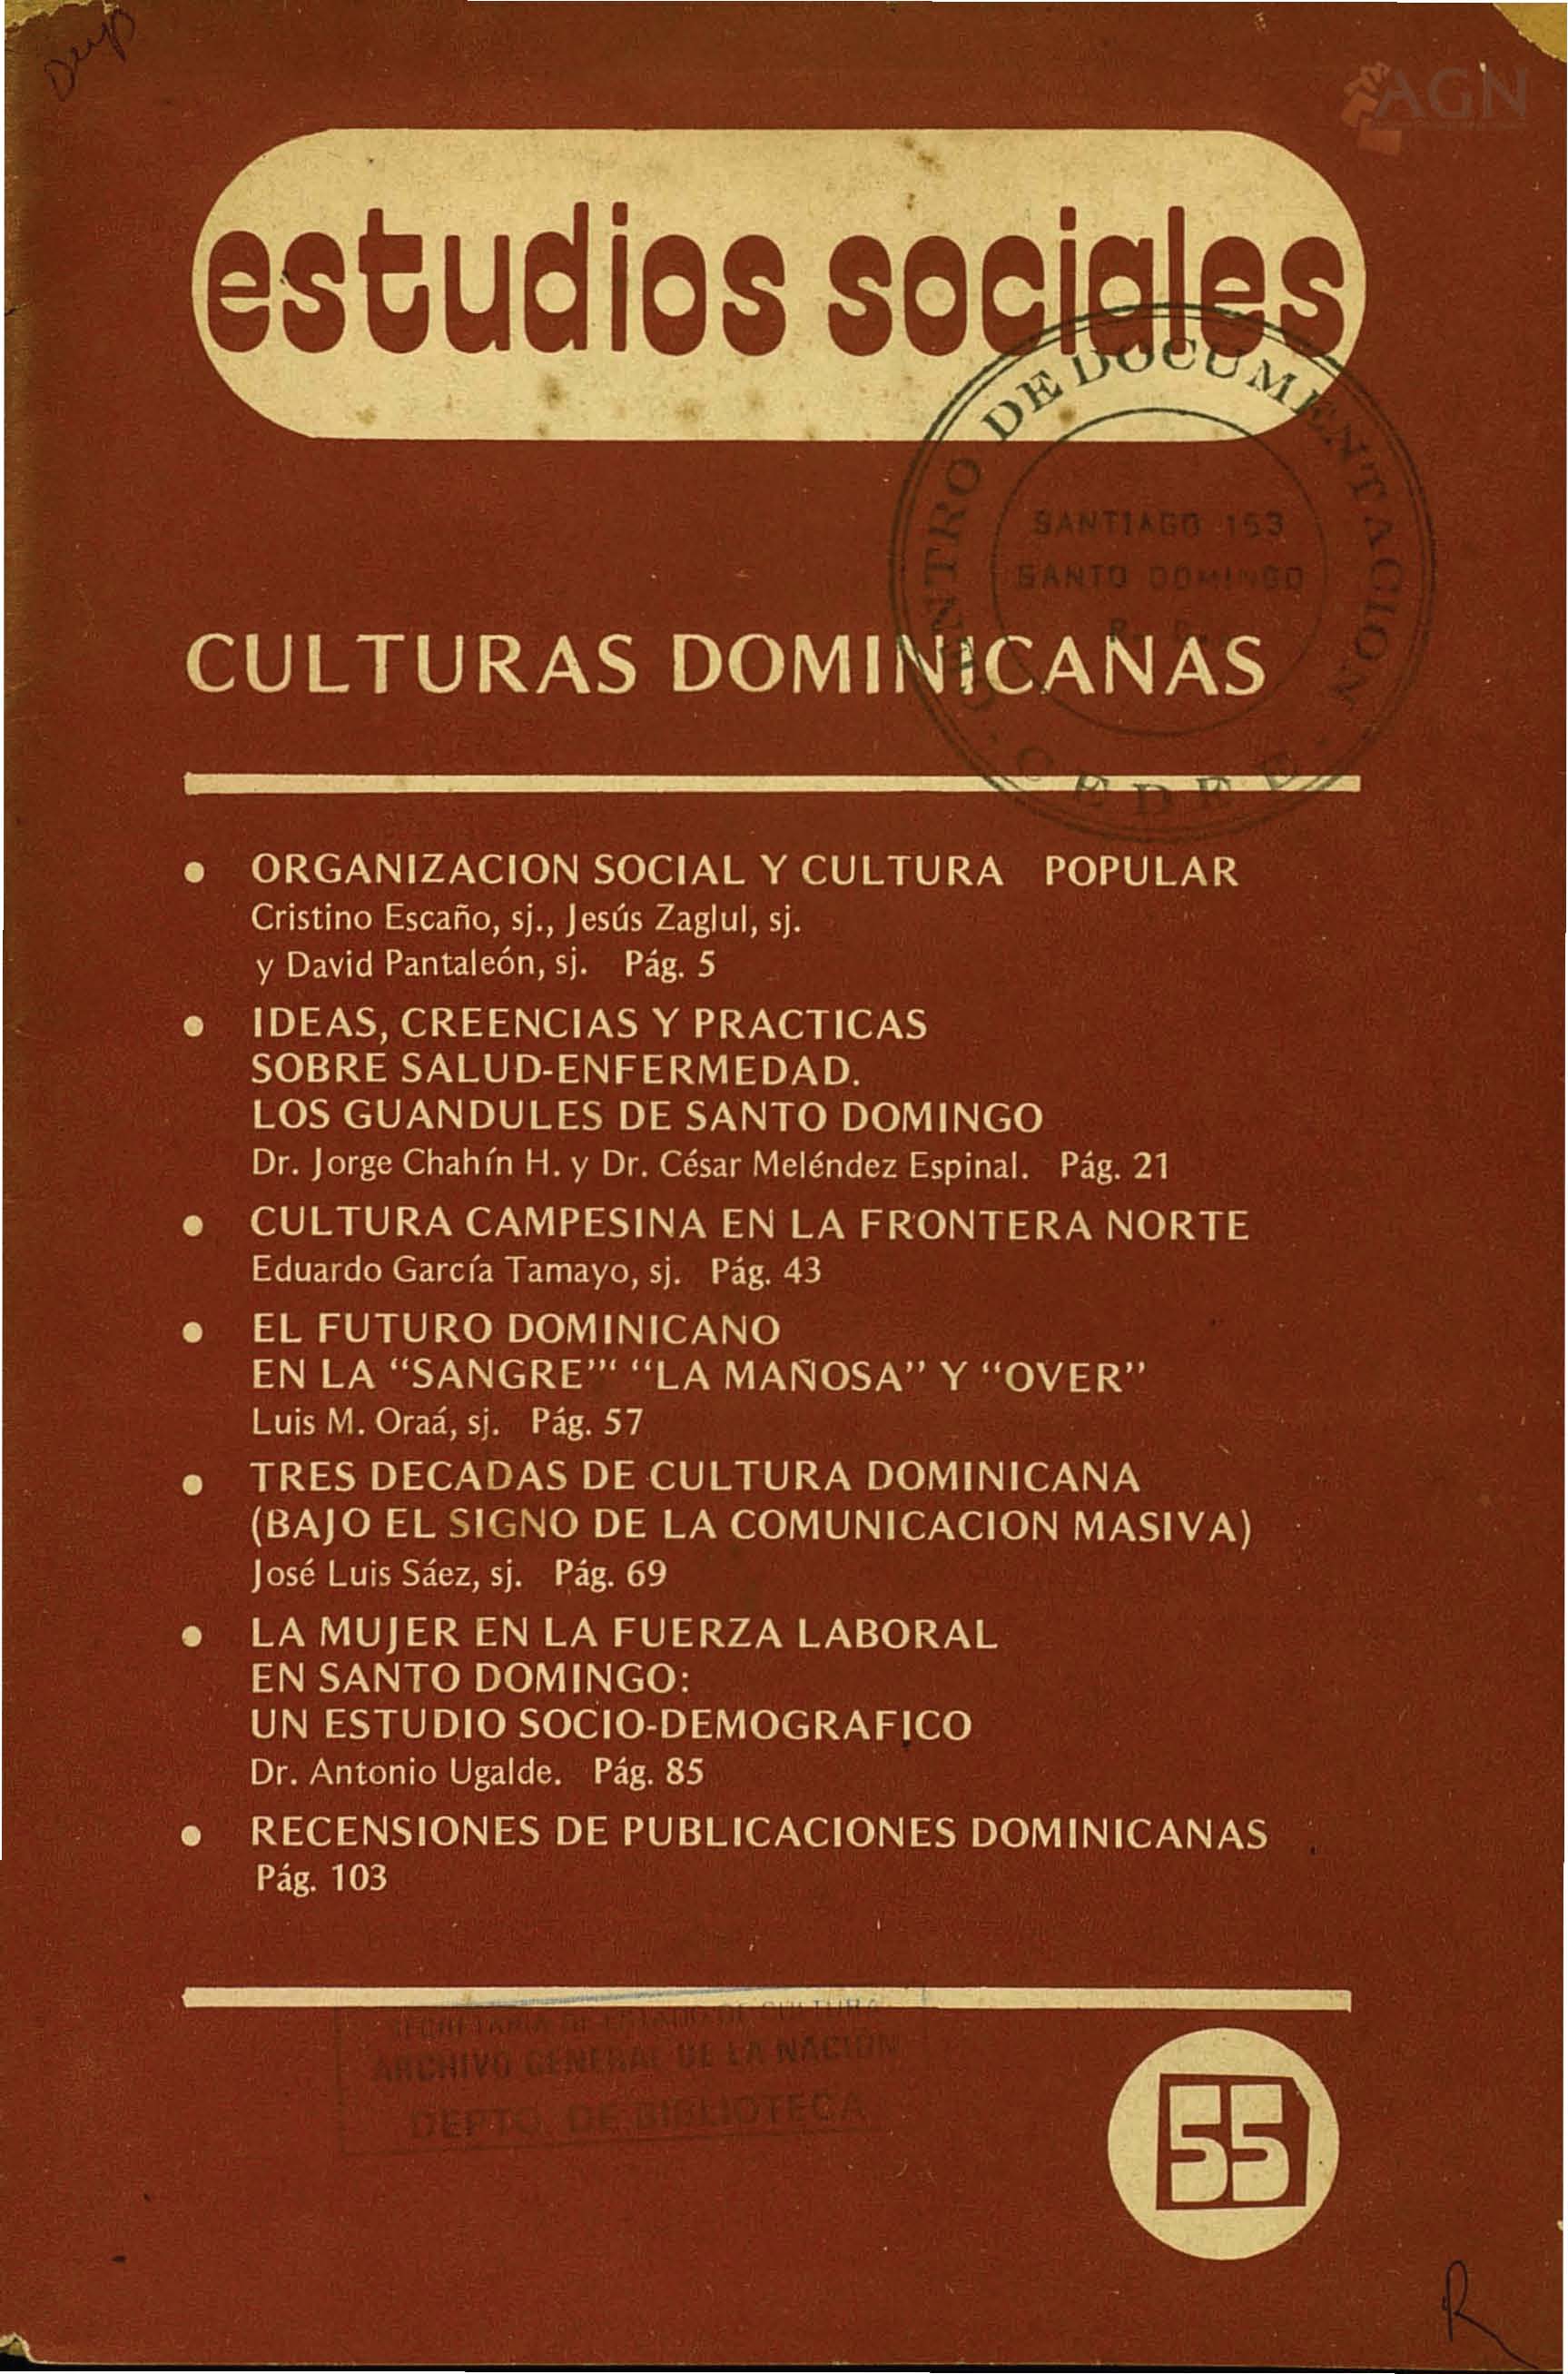 						Ver Vol. 17 Núm. 55 (1984): Culturas Dominicanas
					